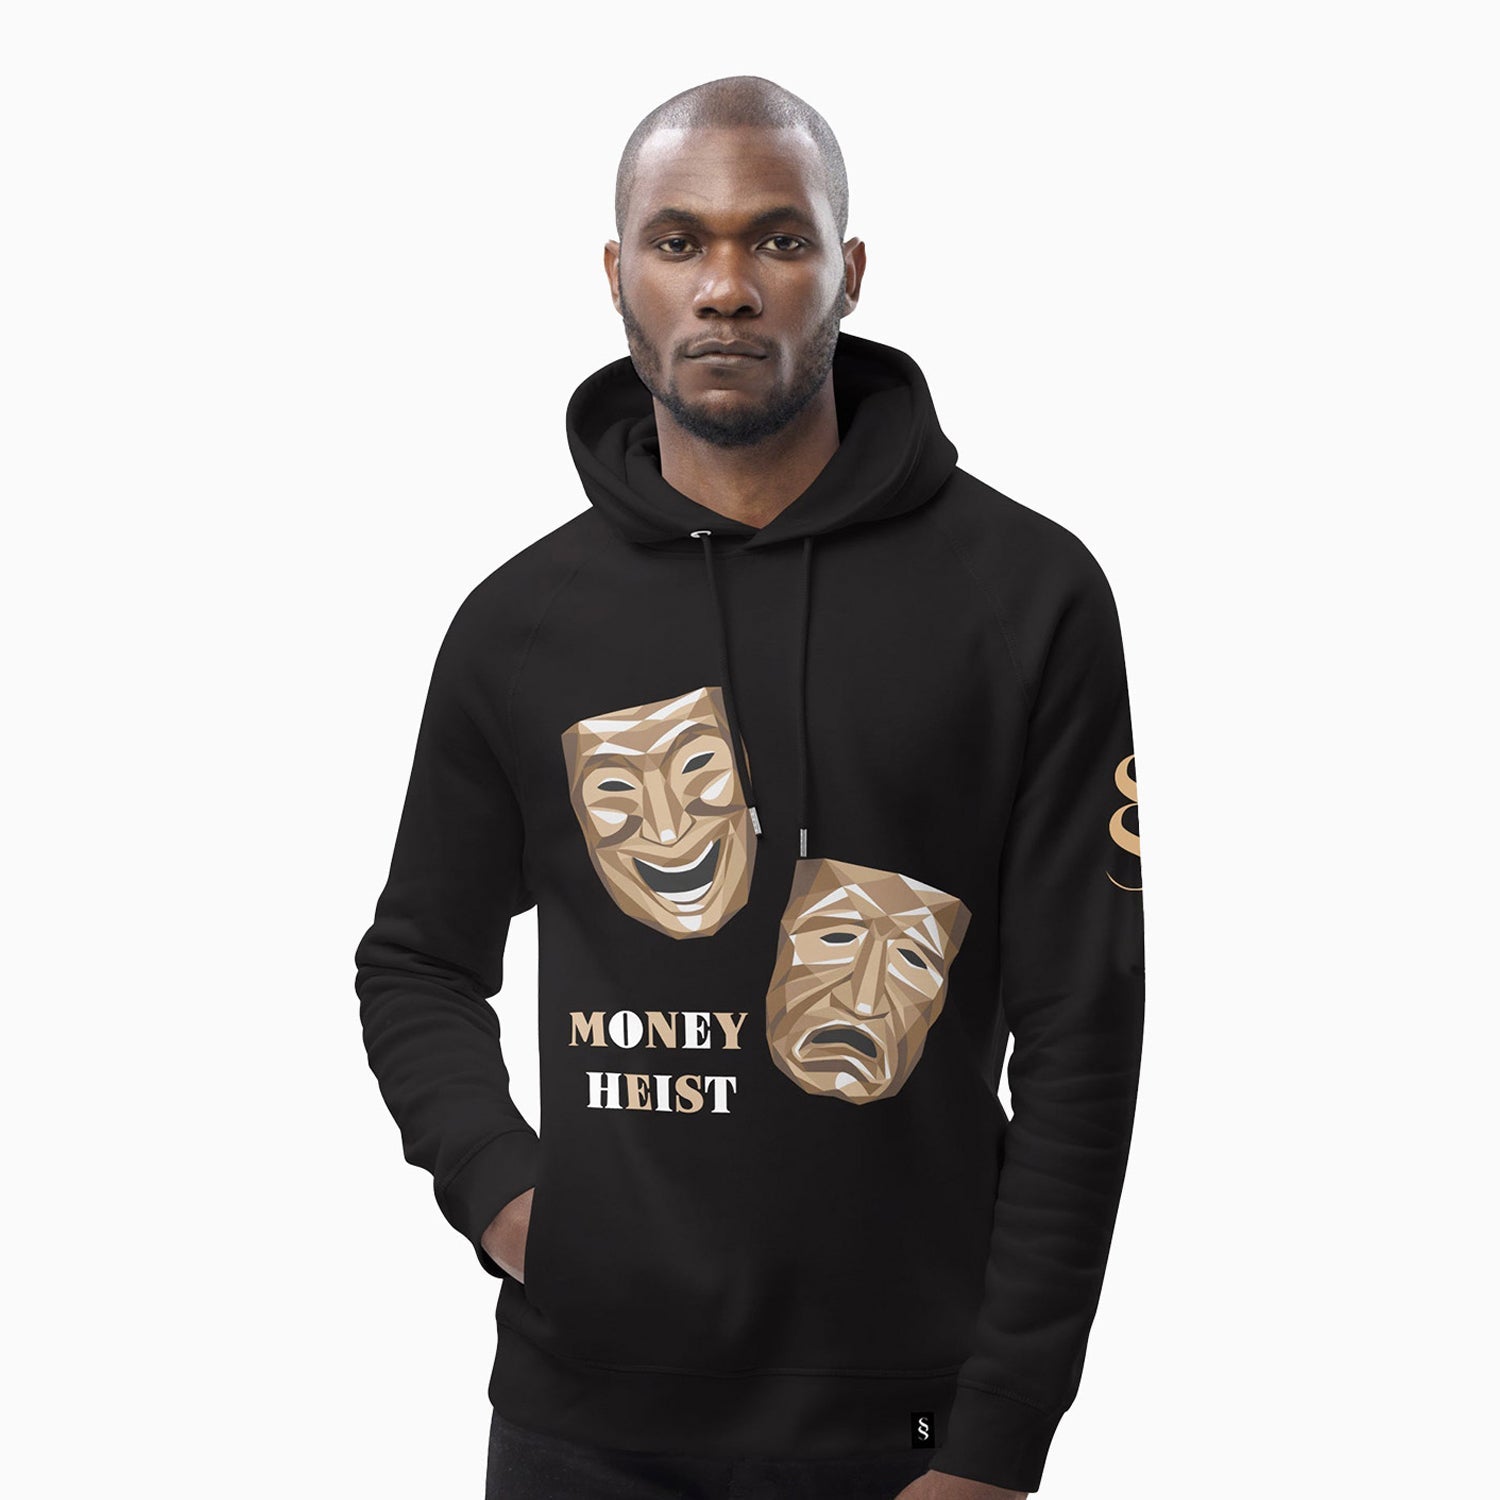 money-heist-design-printed-pull-over-hoodie-for-men-sh108-010